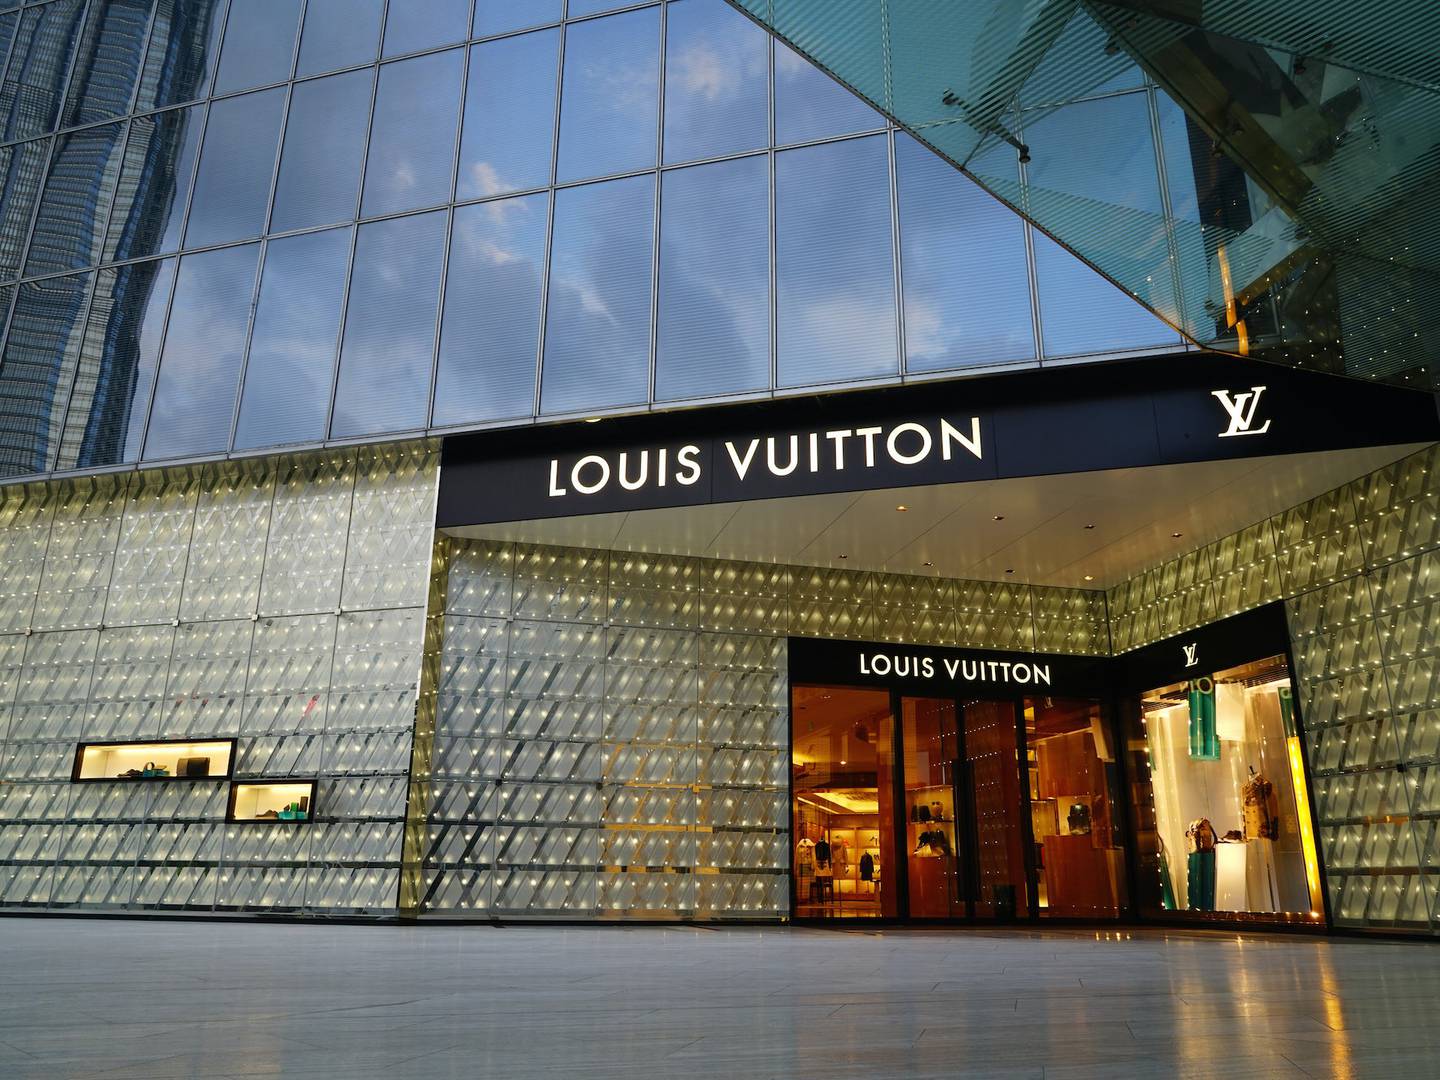 Louis Vuitton's Parent Company Lvmh Wikipedia